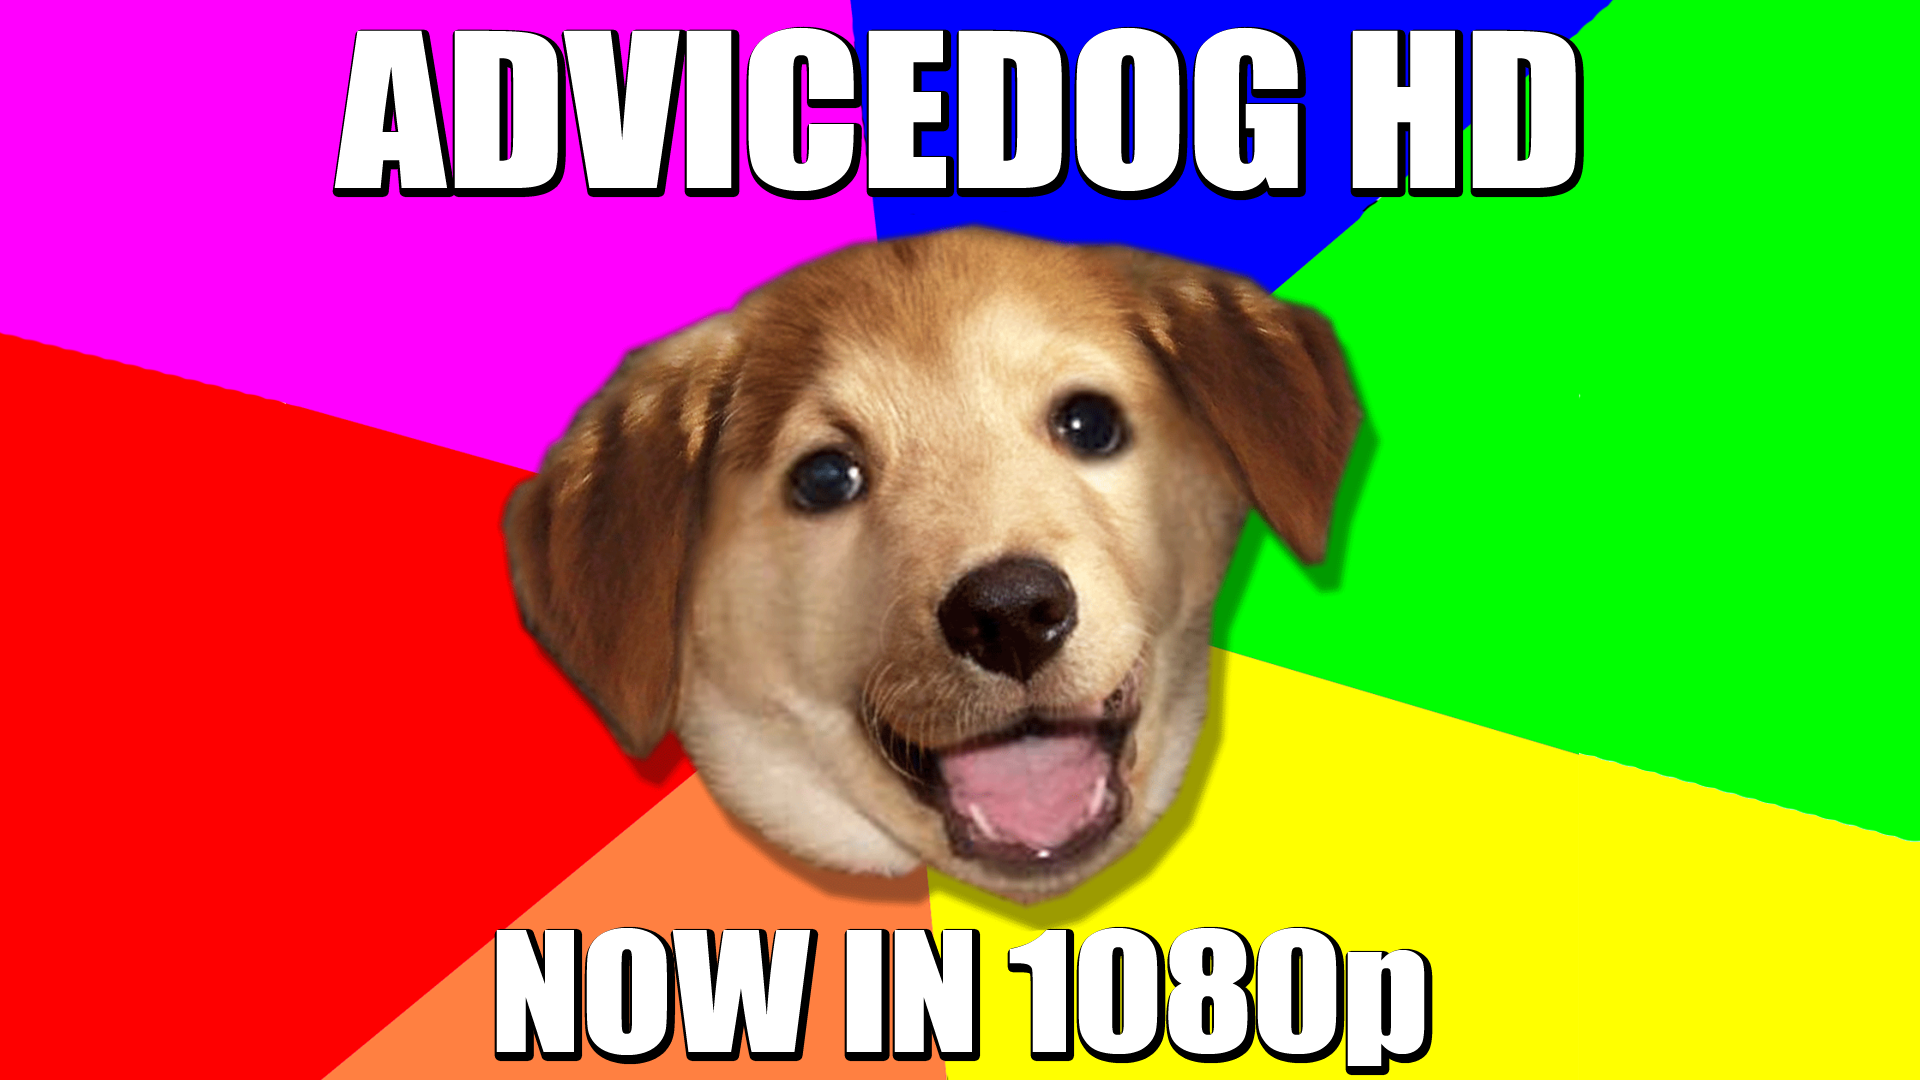 dogs, meme - desktop wallpaper